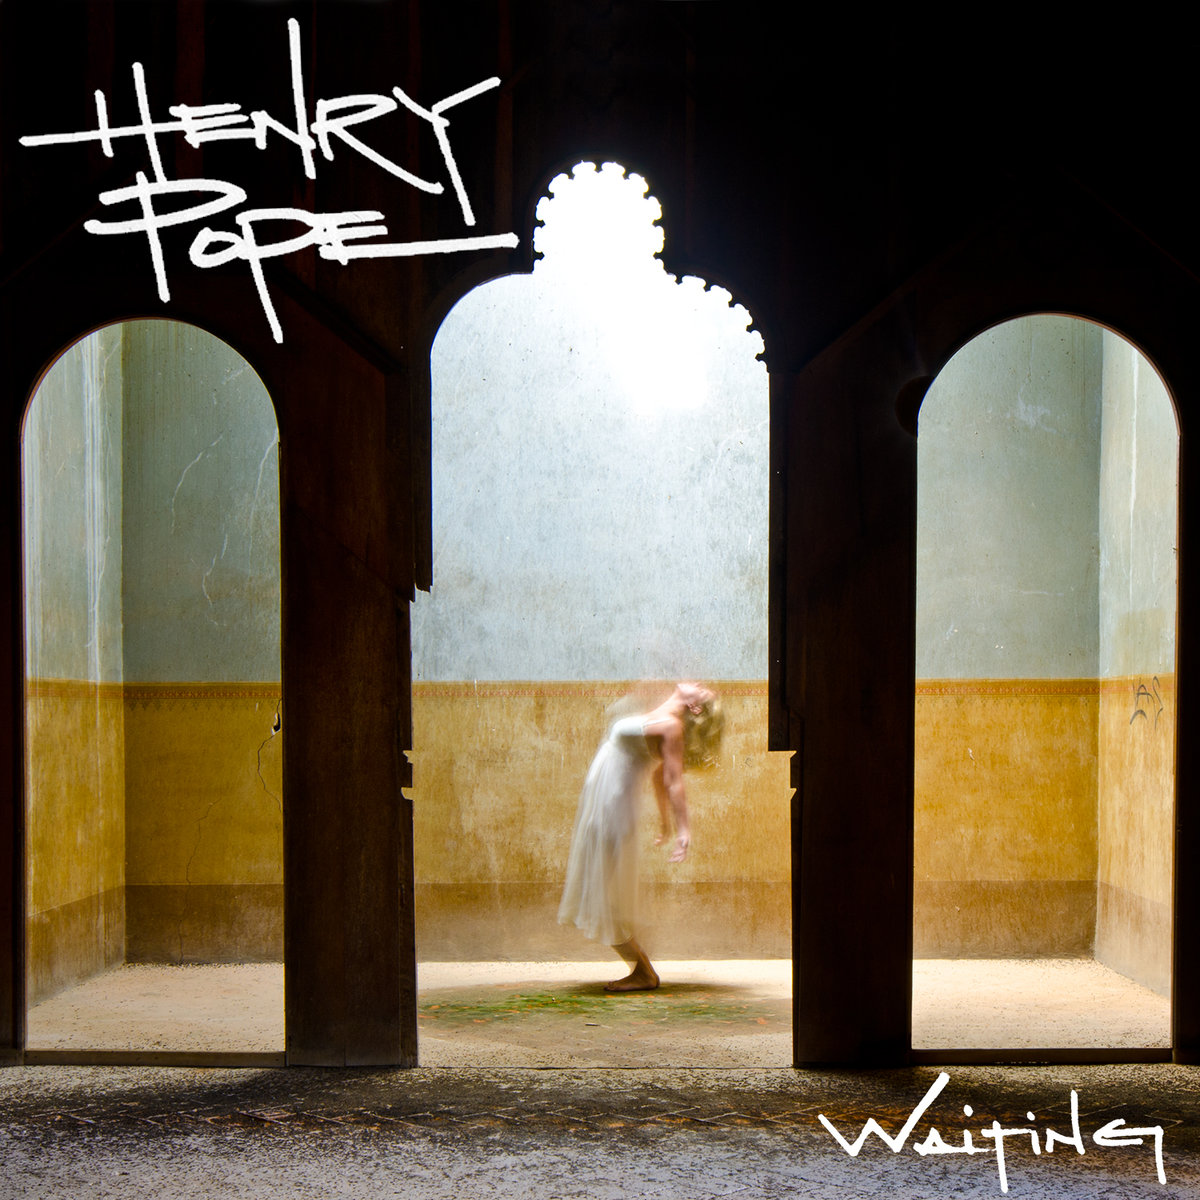 Henry Pope feat. Fernanda Karolys - Luz @ 'Waiting' album (bass, electronic)